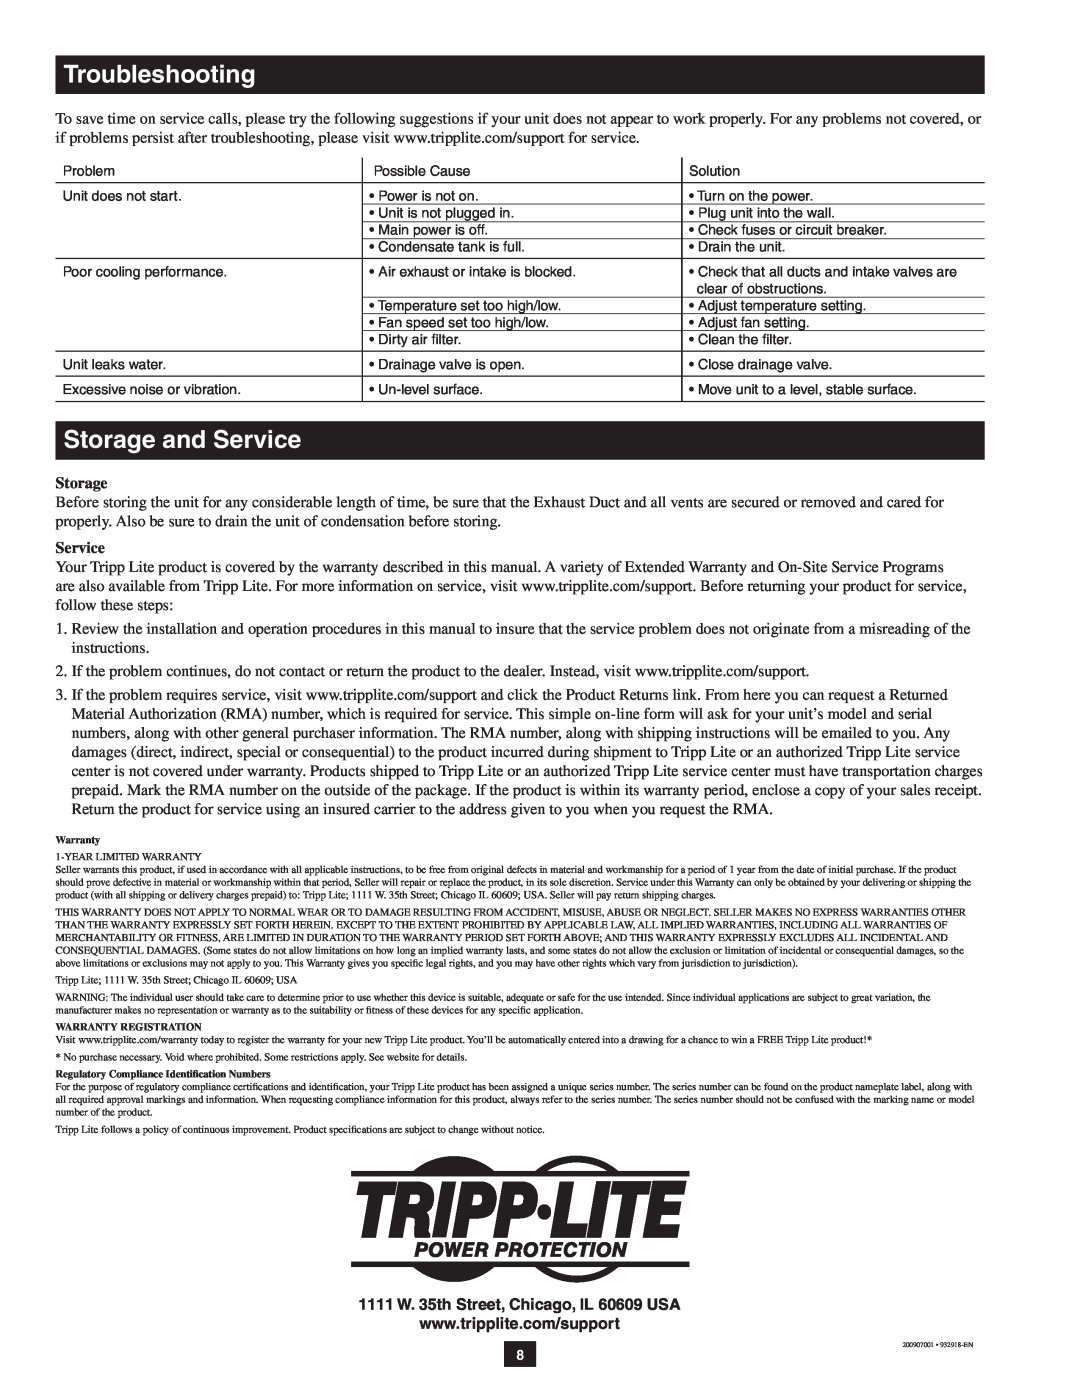 Tripp Lite SRXCOOL12K, SRCOOL12K owner manual Troubleshooting, Storage and Service 